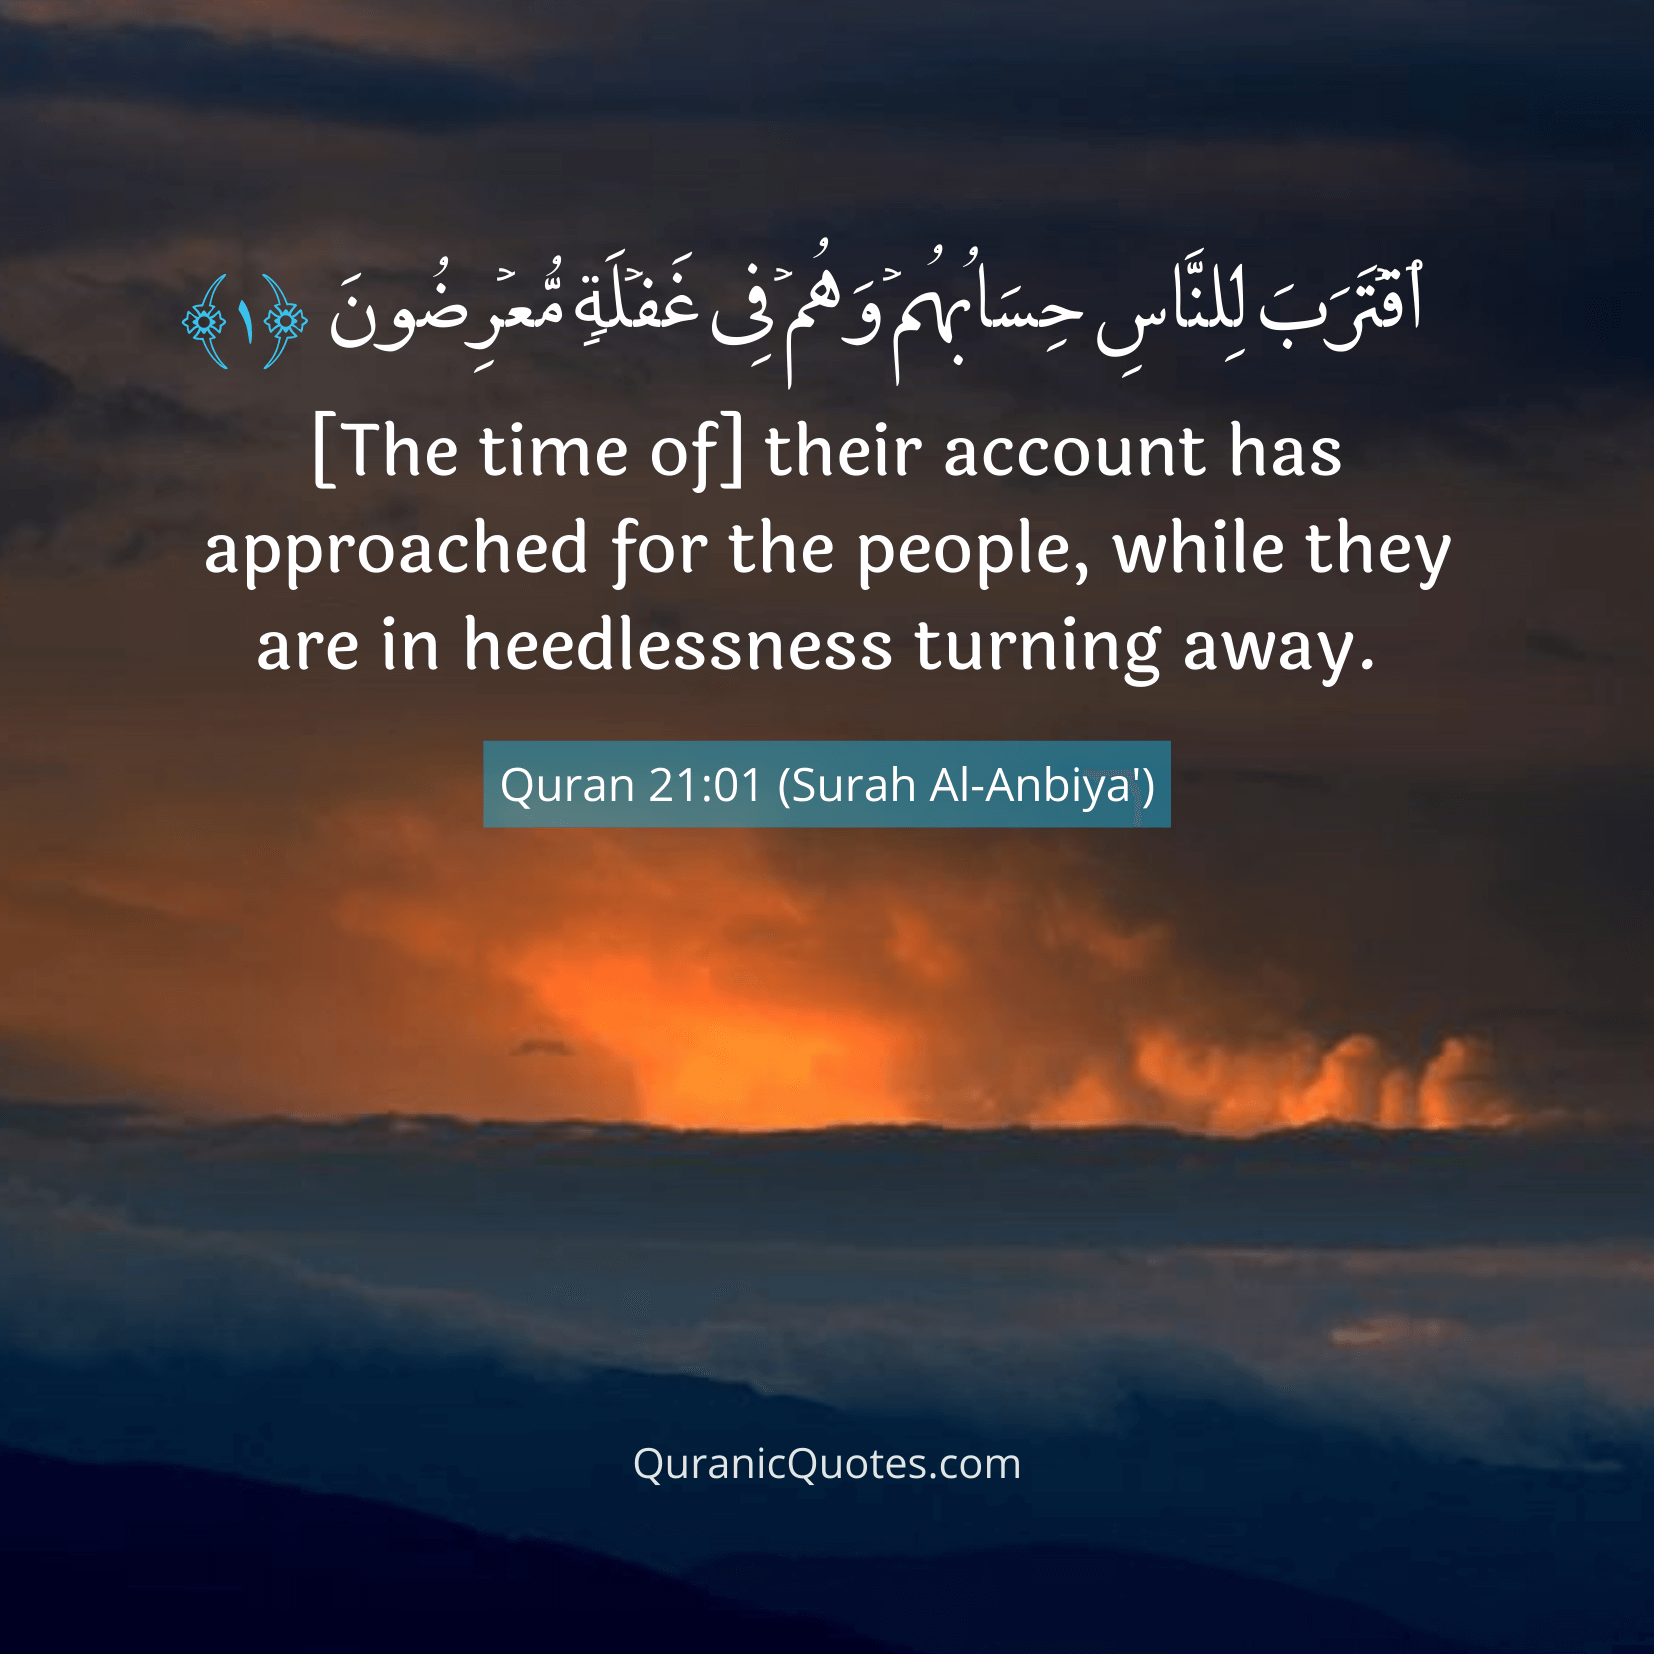 Quranic Quotes in English 404